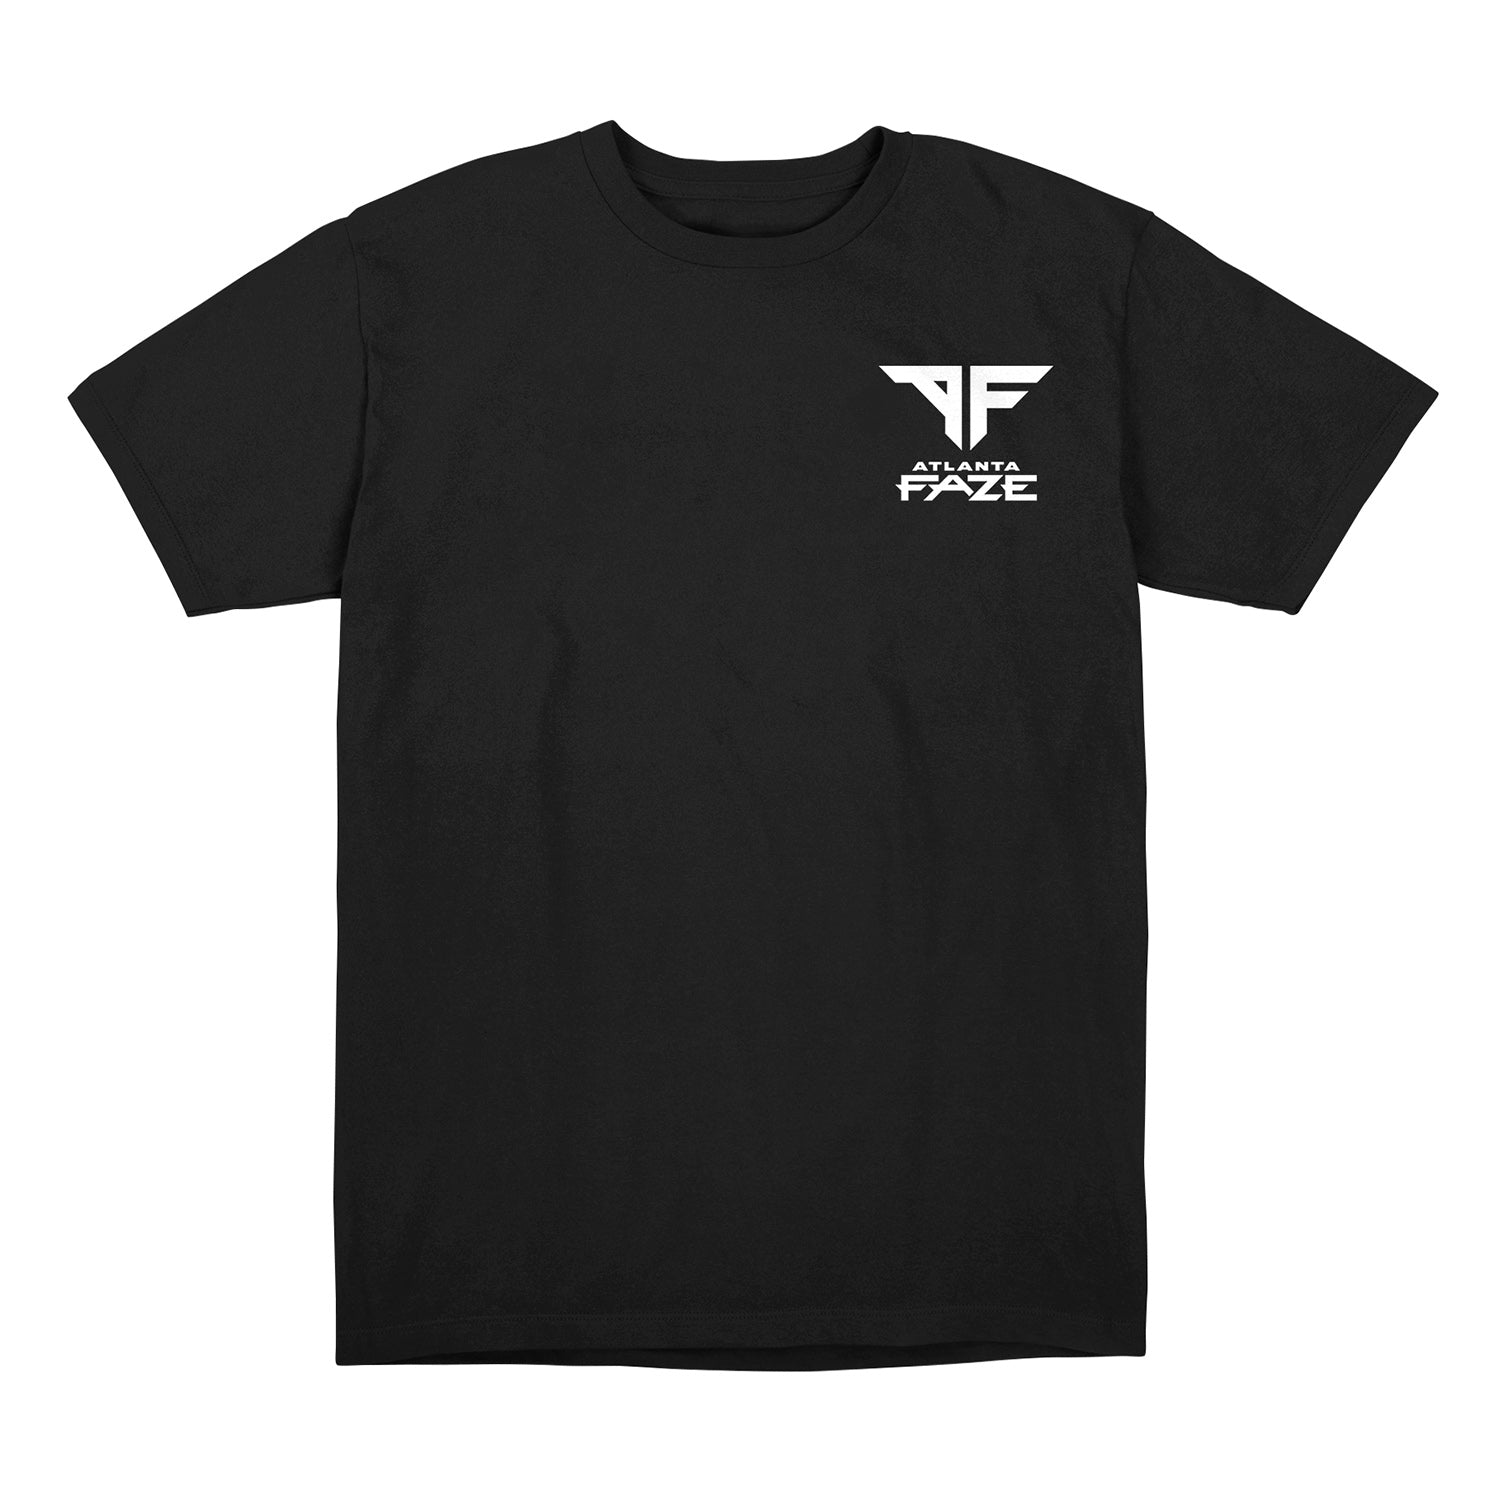 Atlanta Faze Black Slogan T-Shirt - Front View